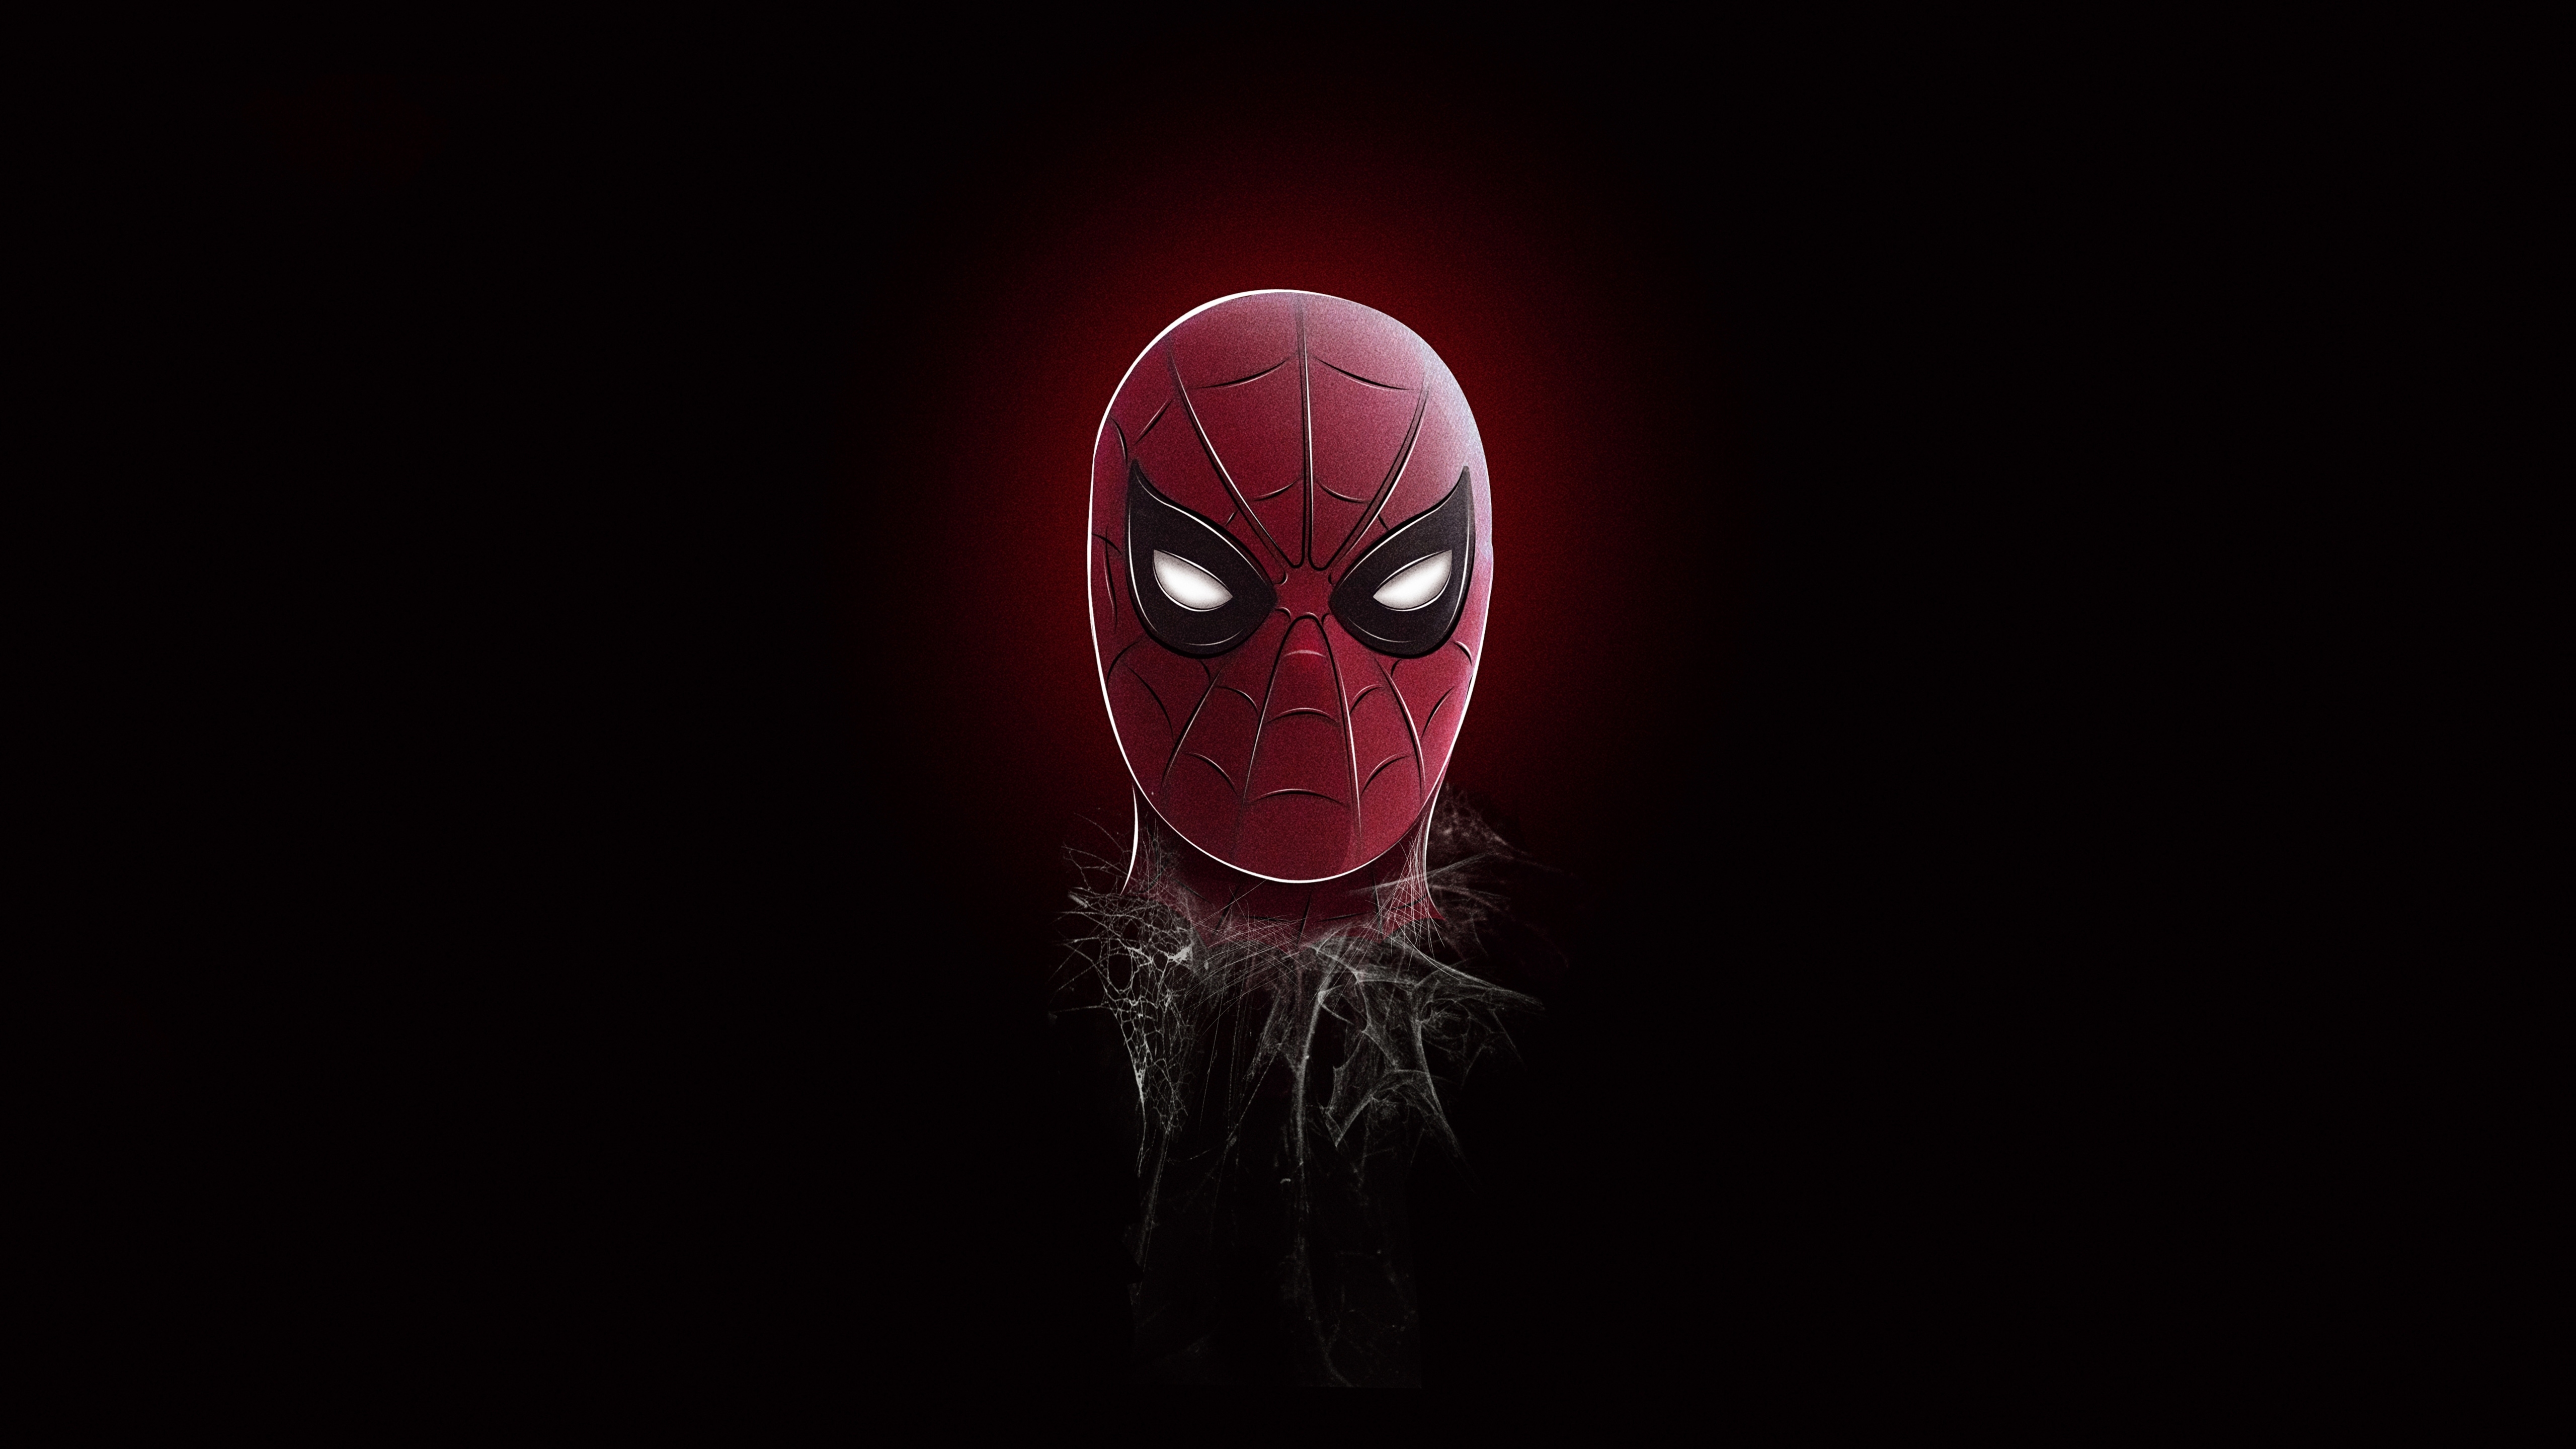 Spiderman mask on black background Desktop wallpapers 640x480